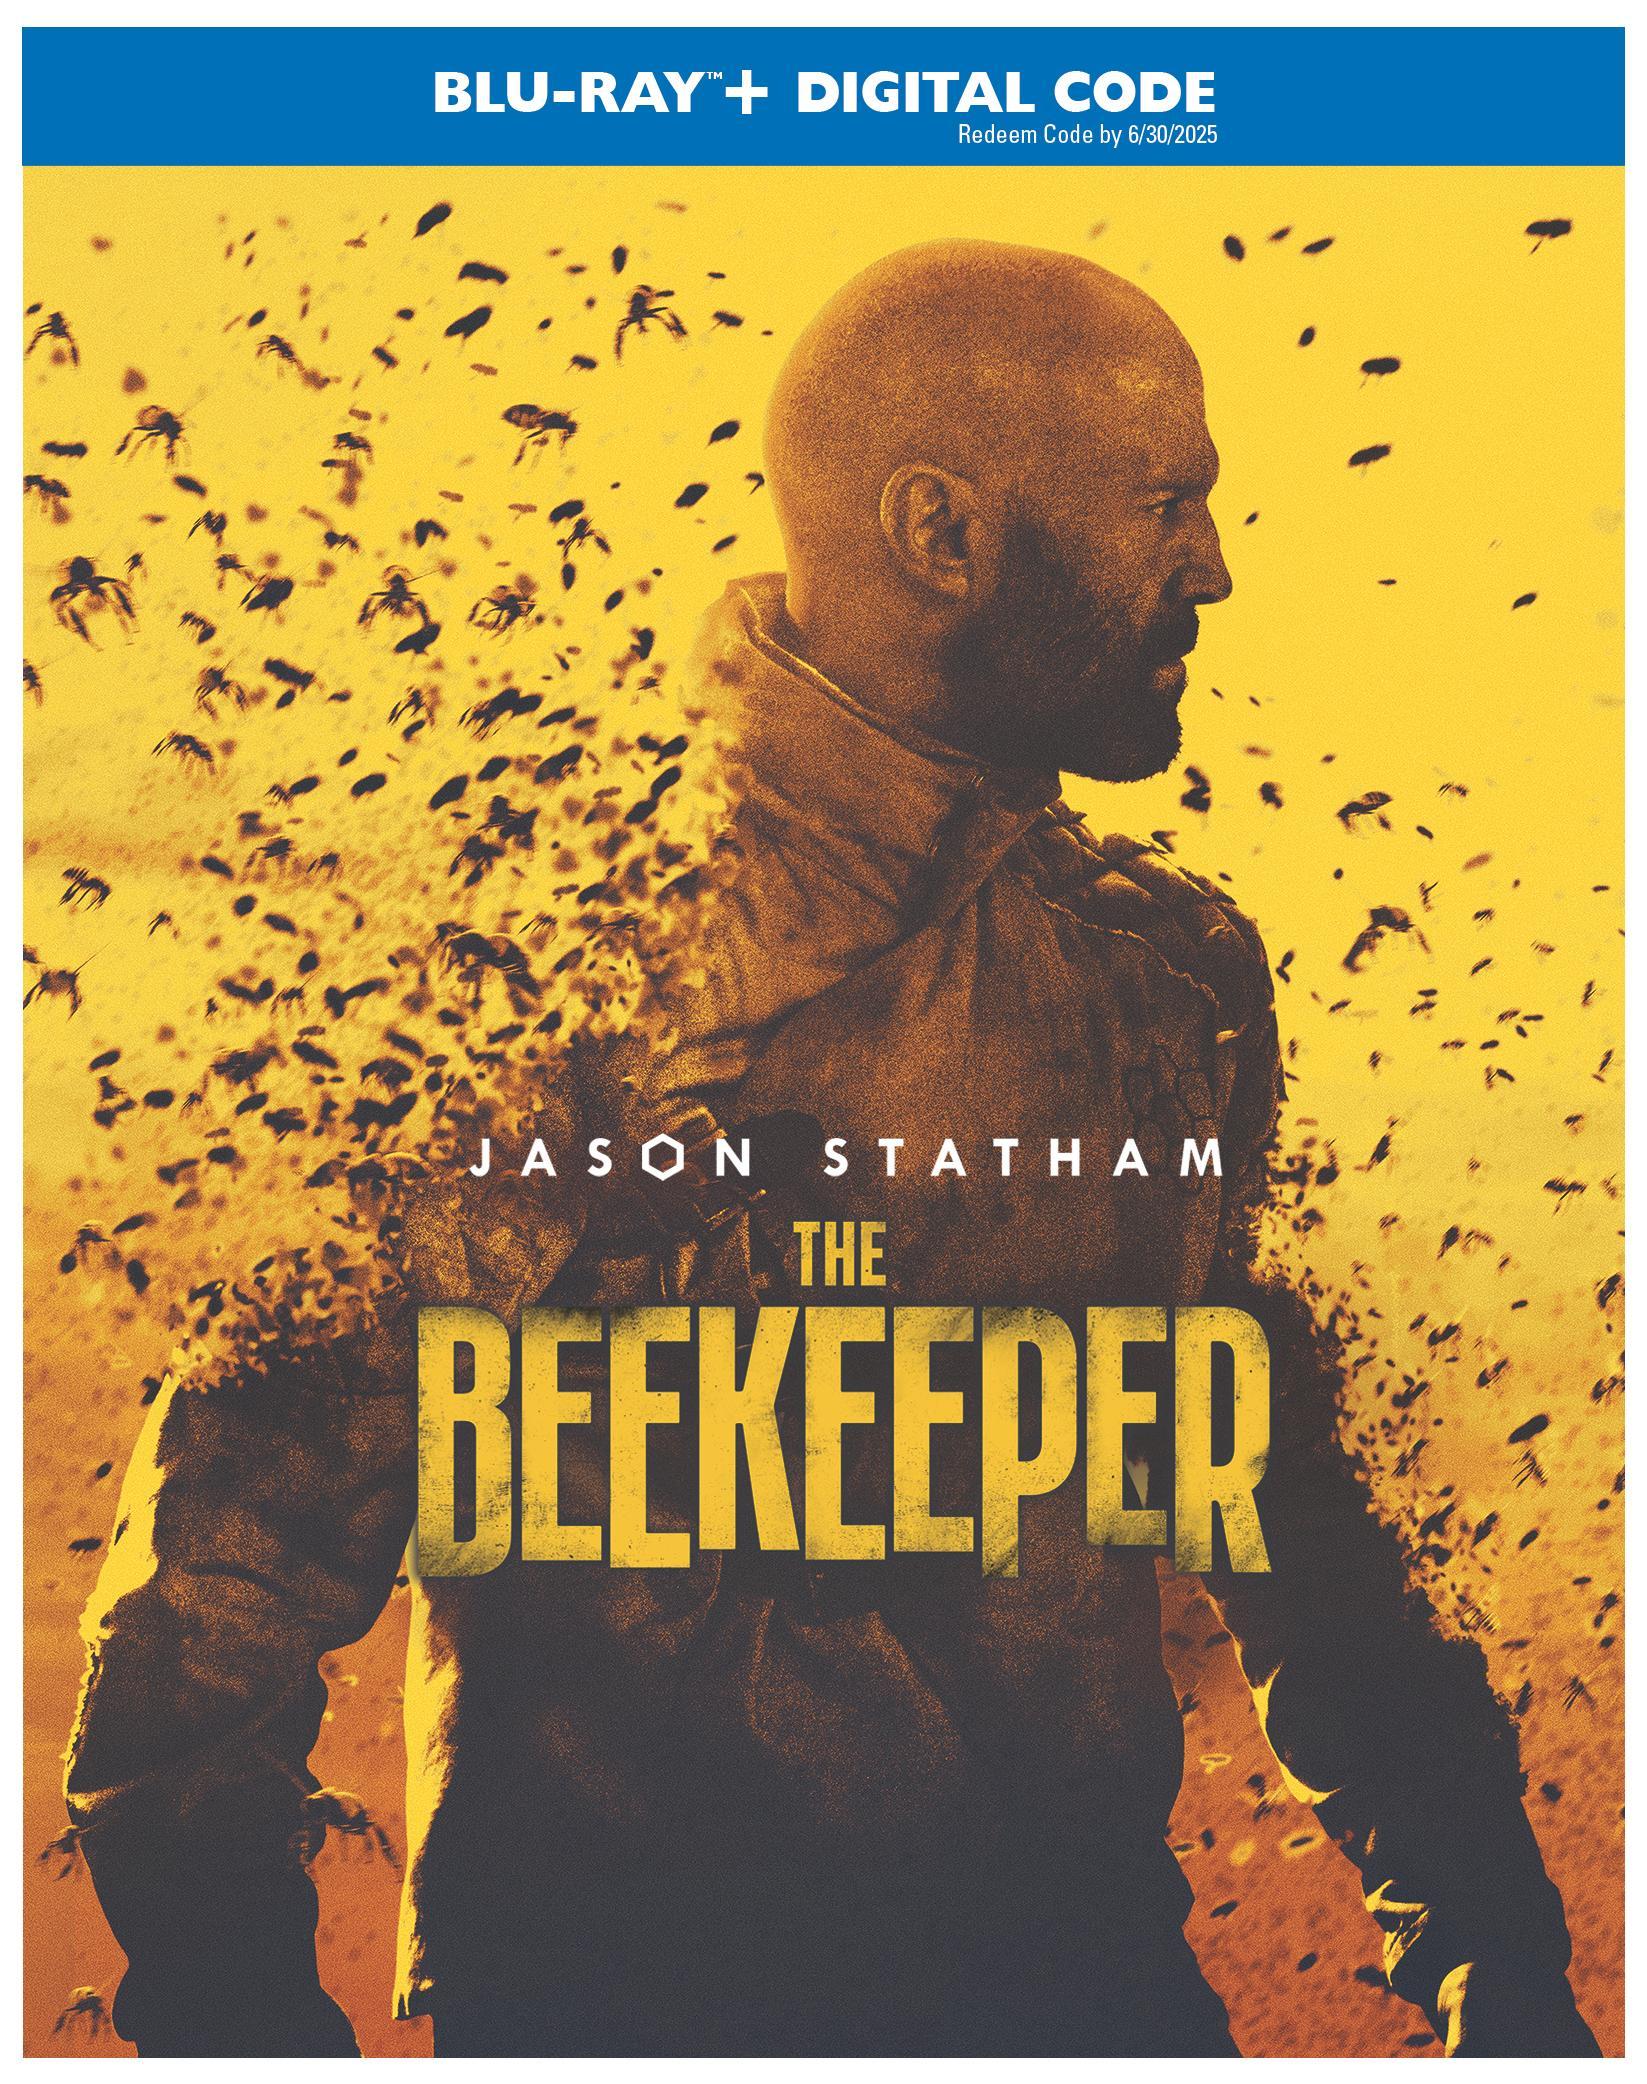 The Beekeeper (Blu-ray + Digital Copy) - image 1 of 3